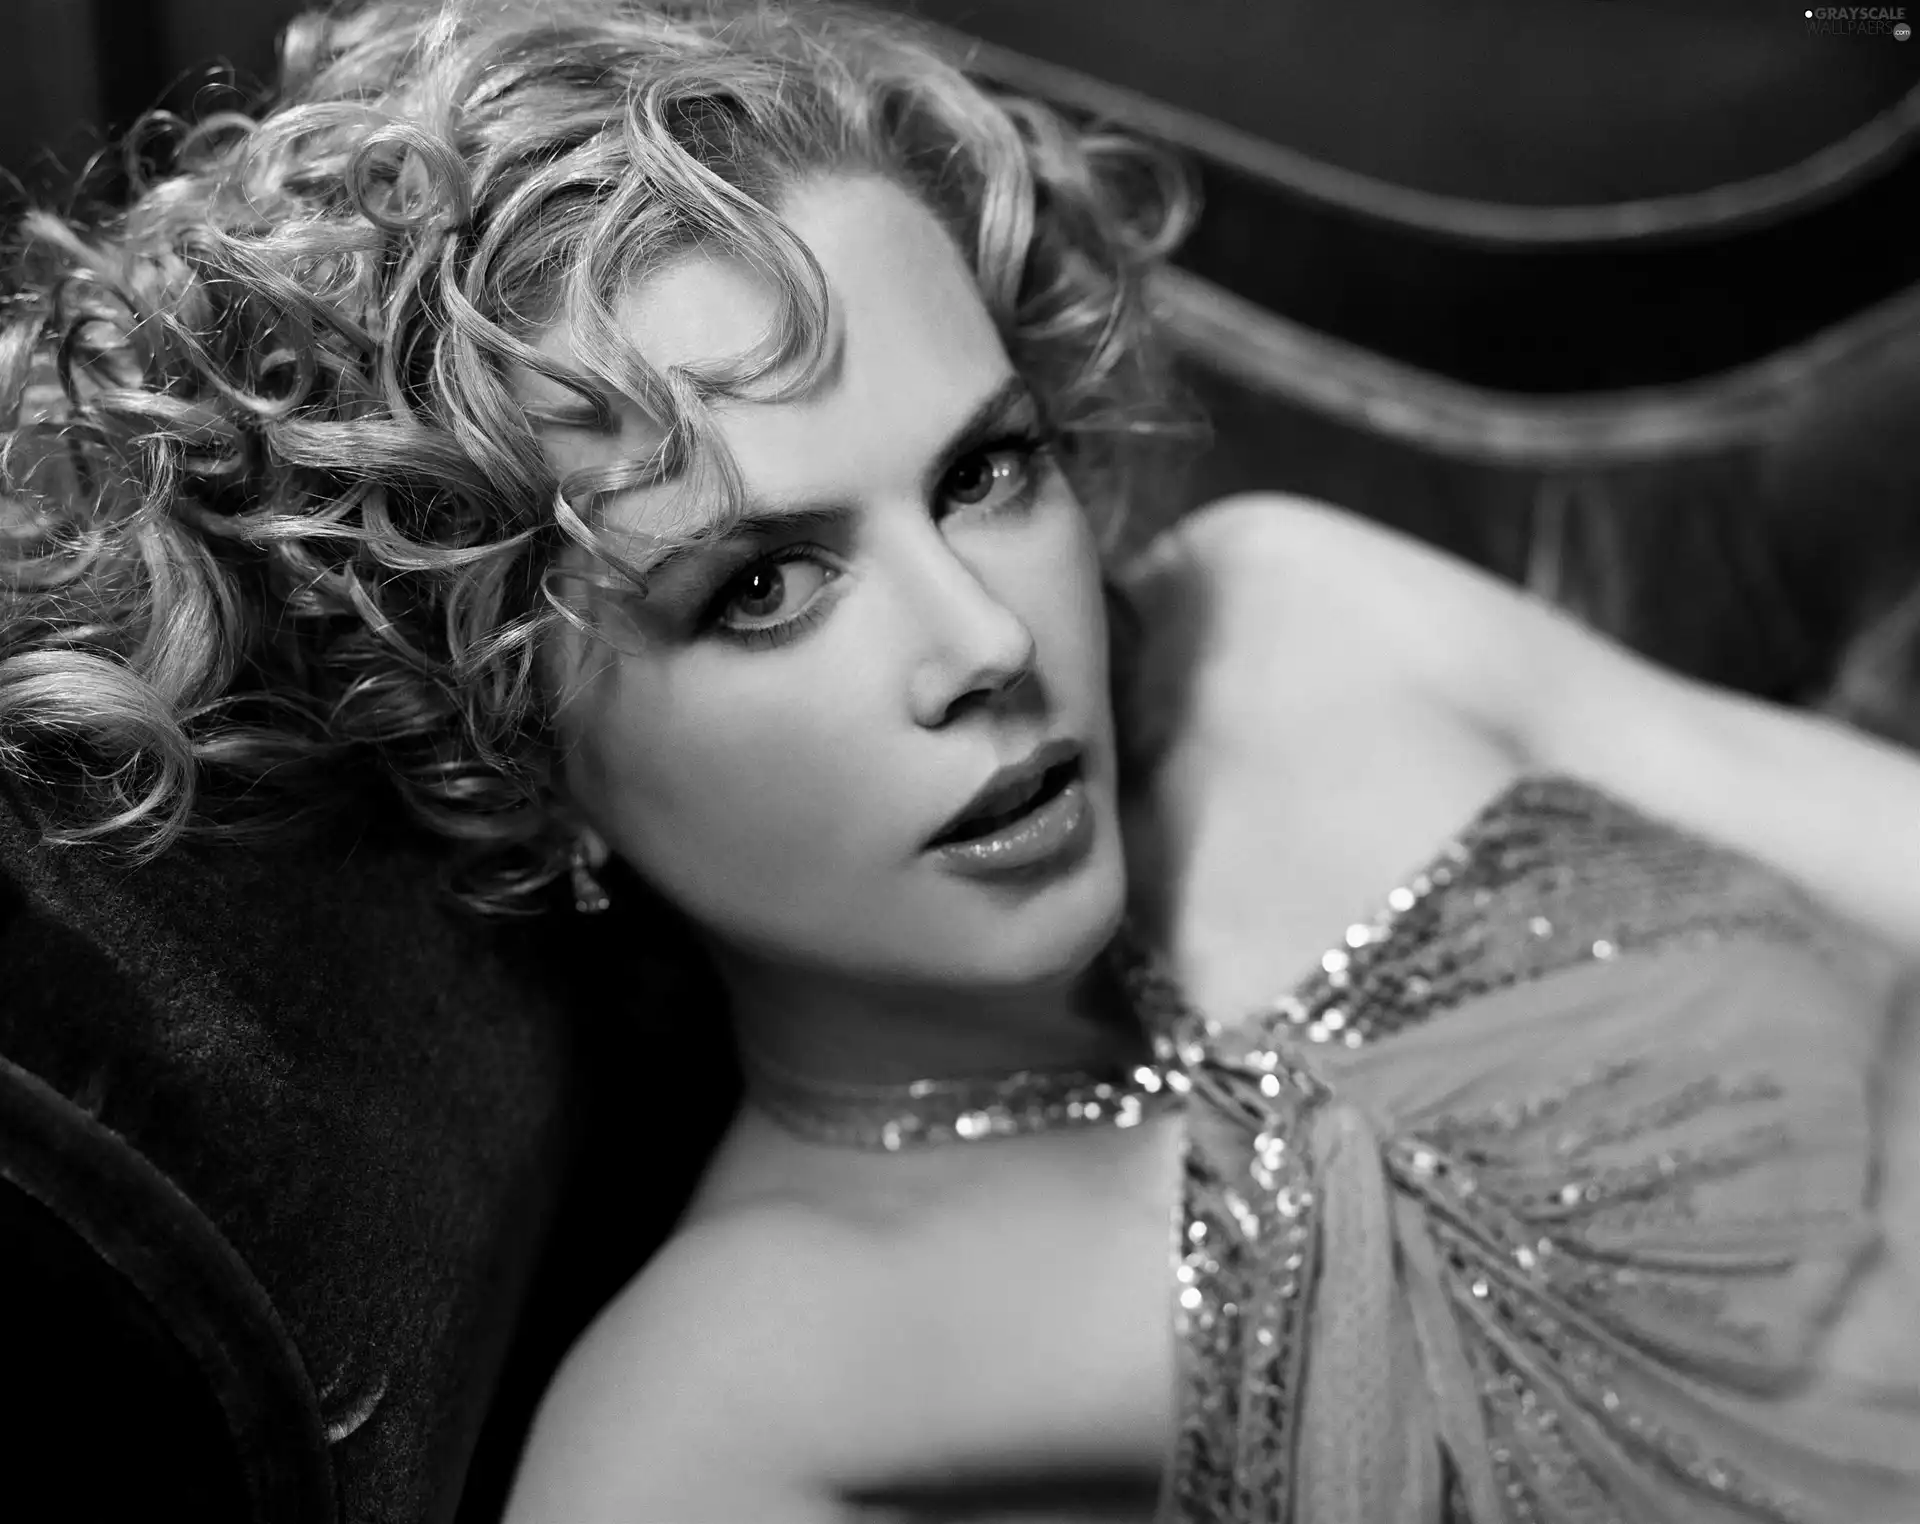 Nicole Kidman, Hair